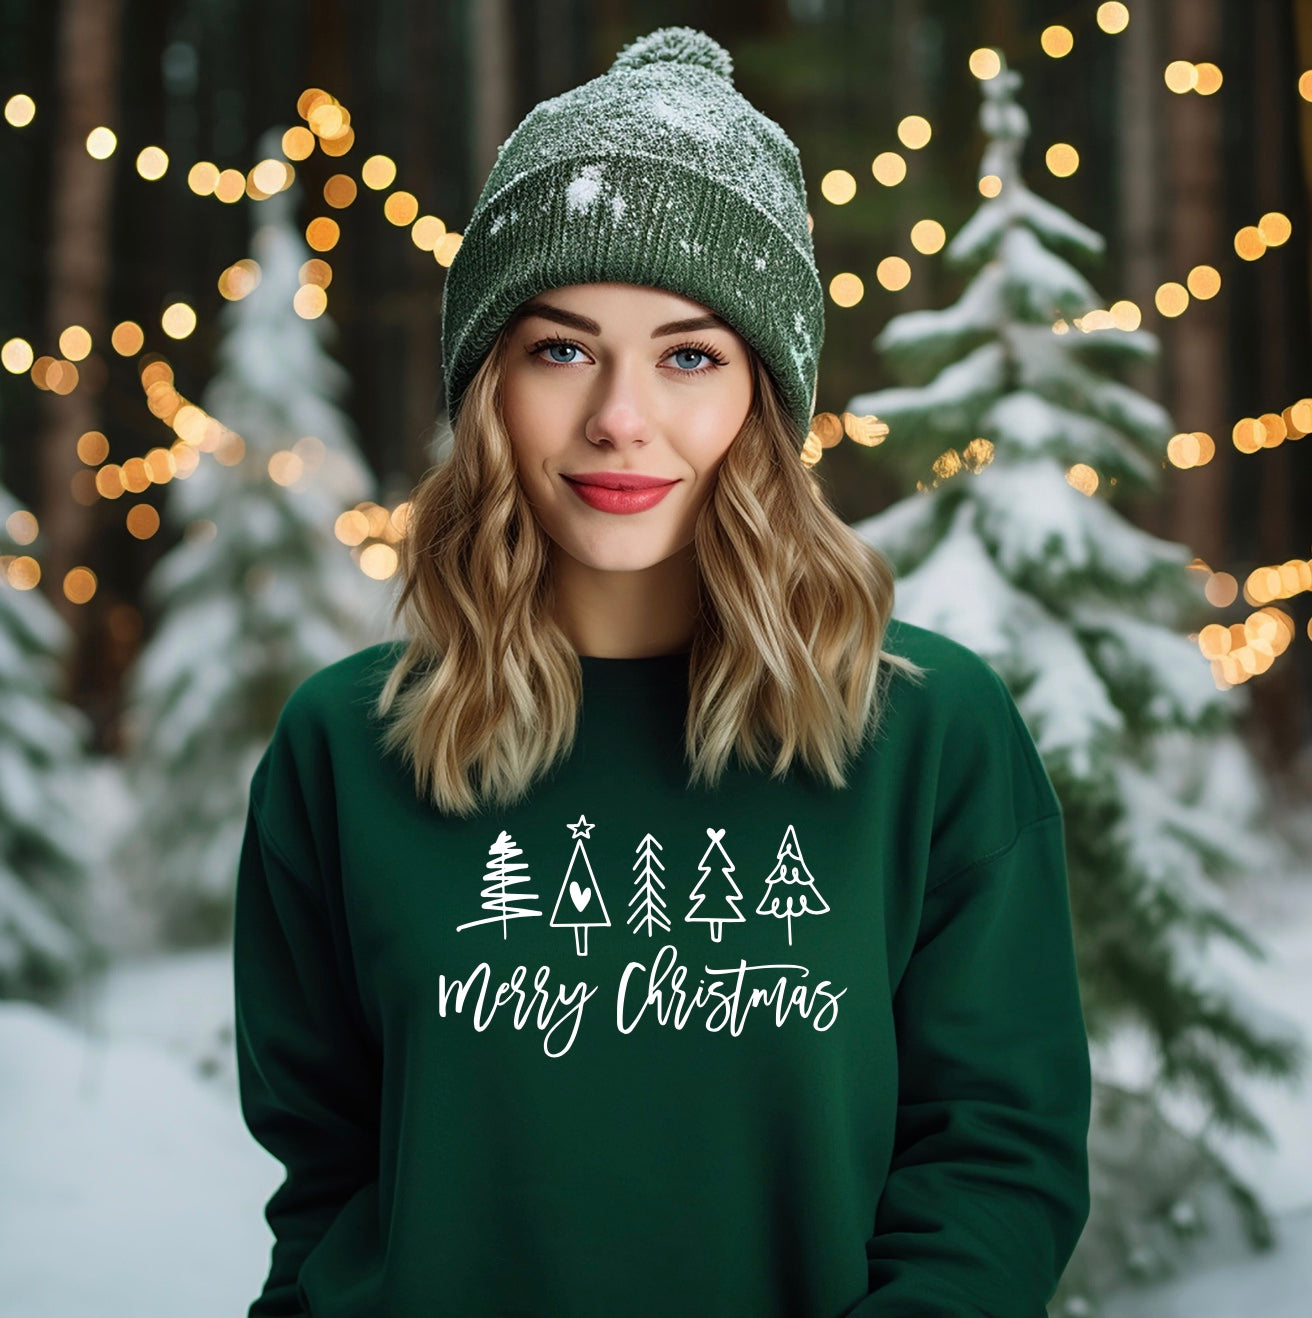 Merry Christmas crewneck sweatshirt with Christmas tree design for women in green